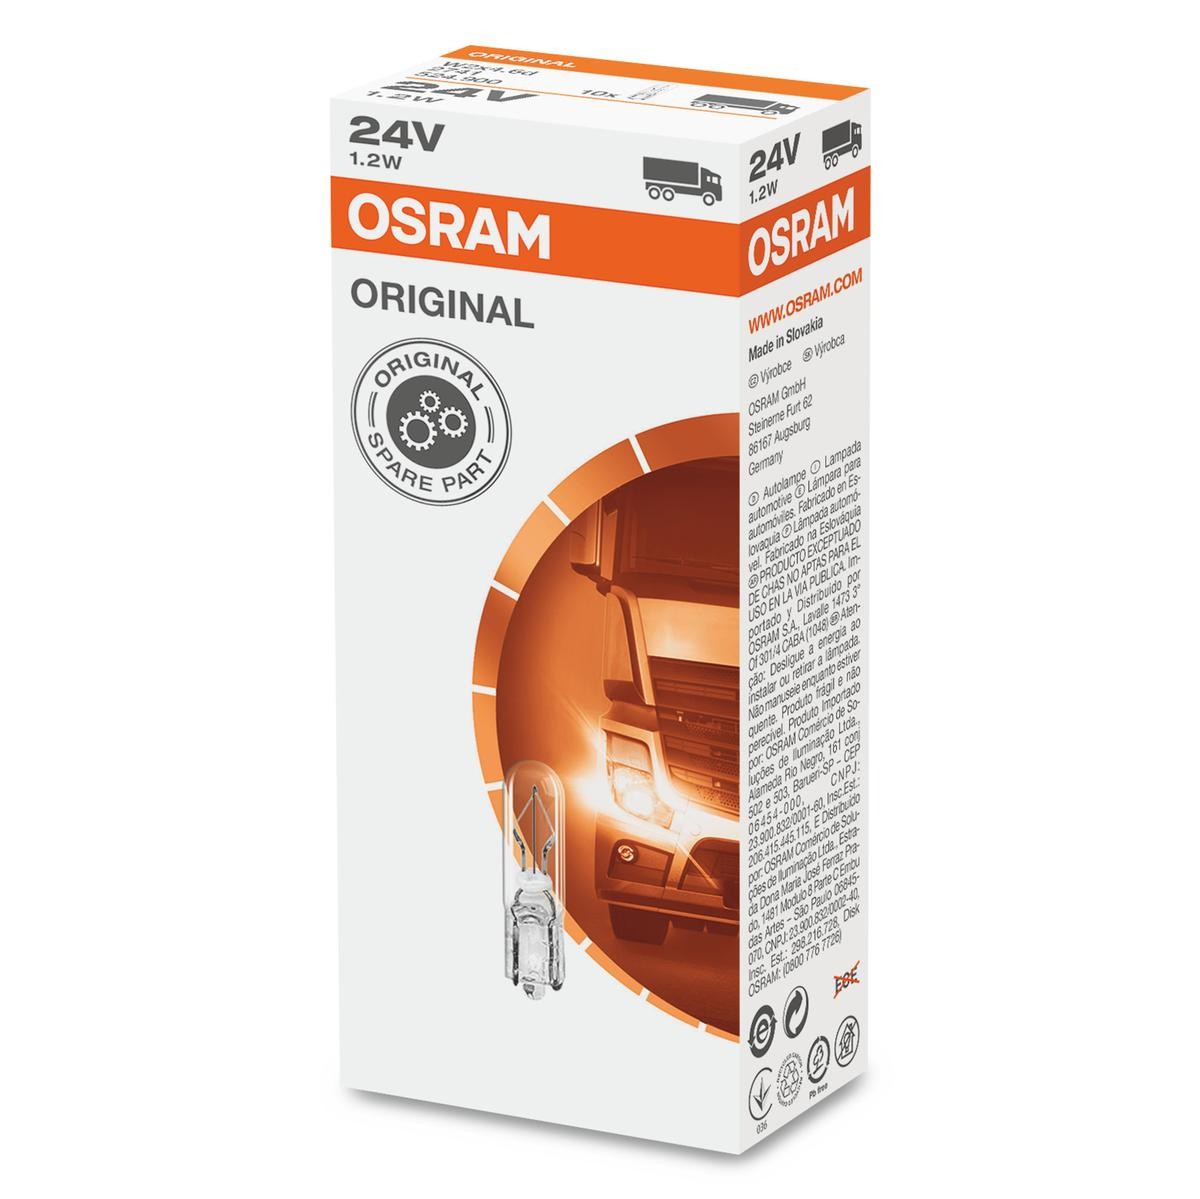 OSRAM ORIGINAL LINE 24V 1,2W, Socket Bulb Bulb 2741 buy